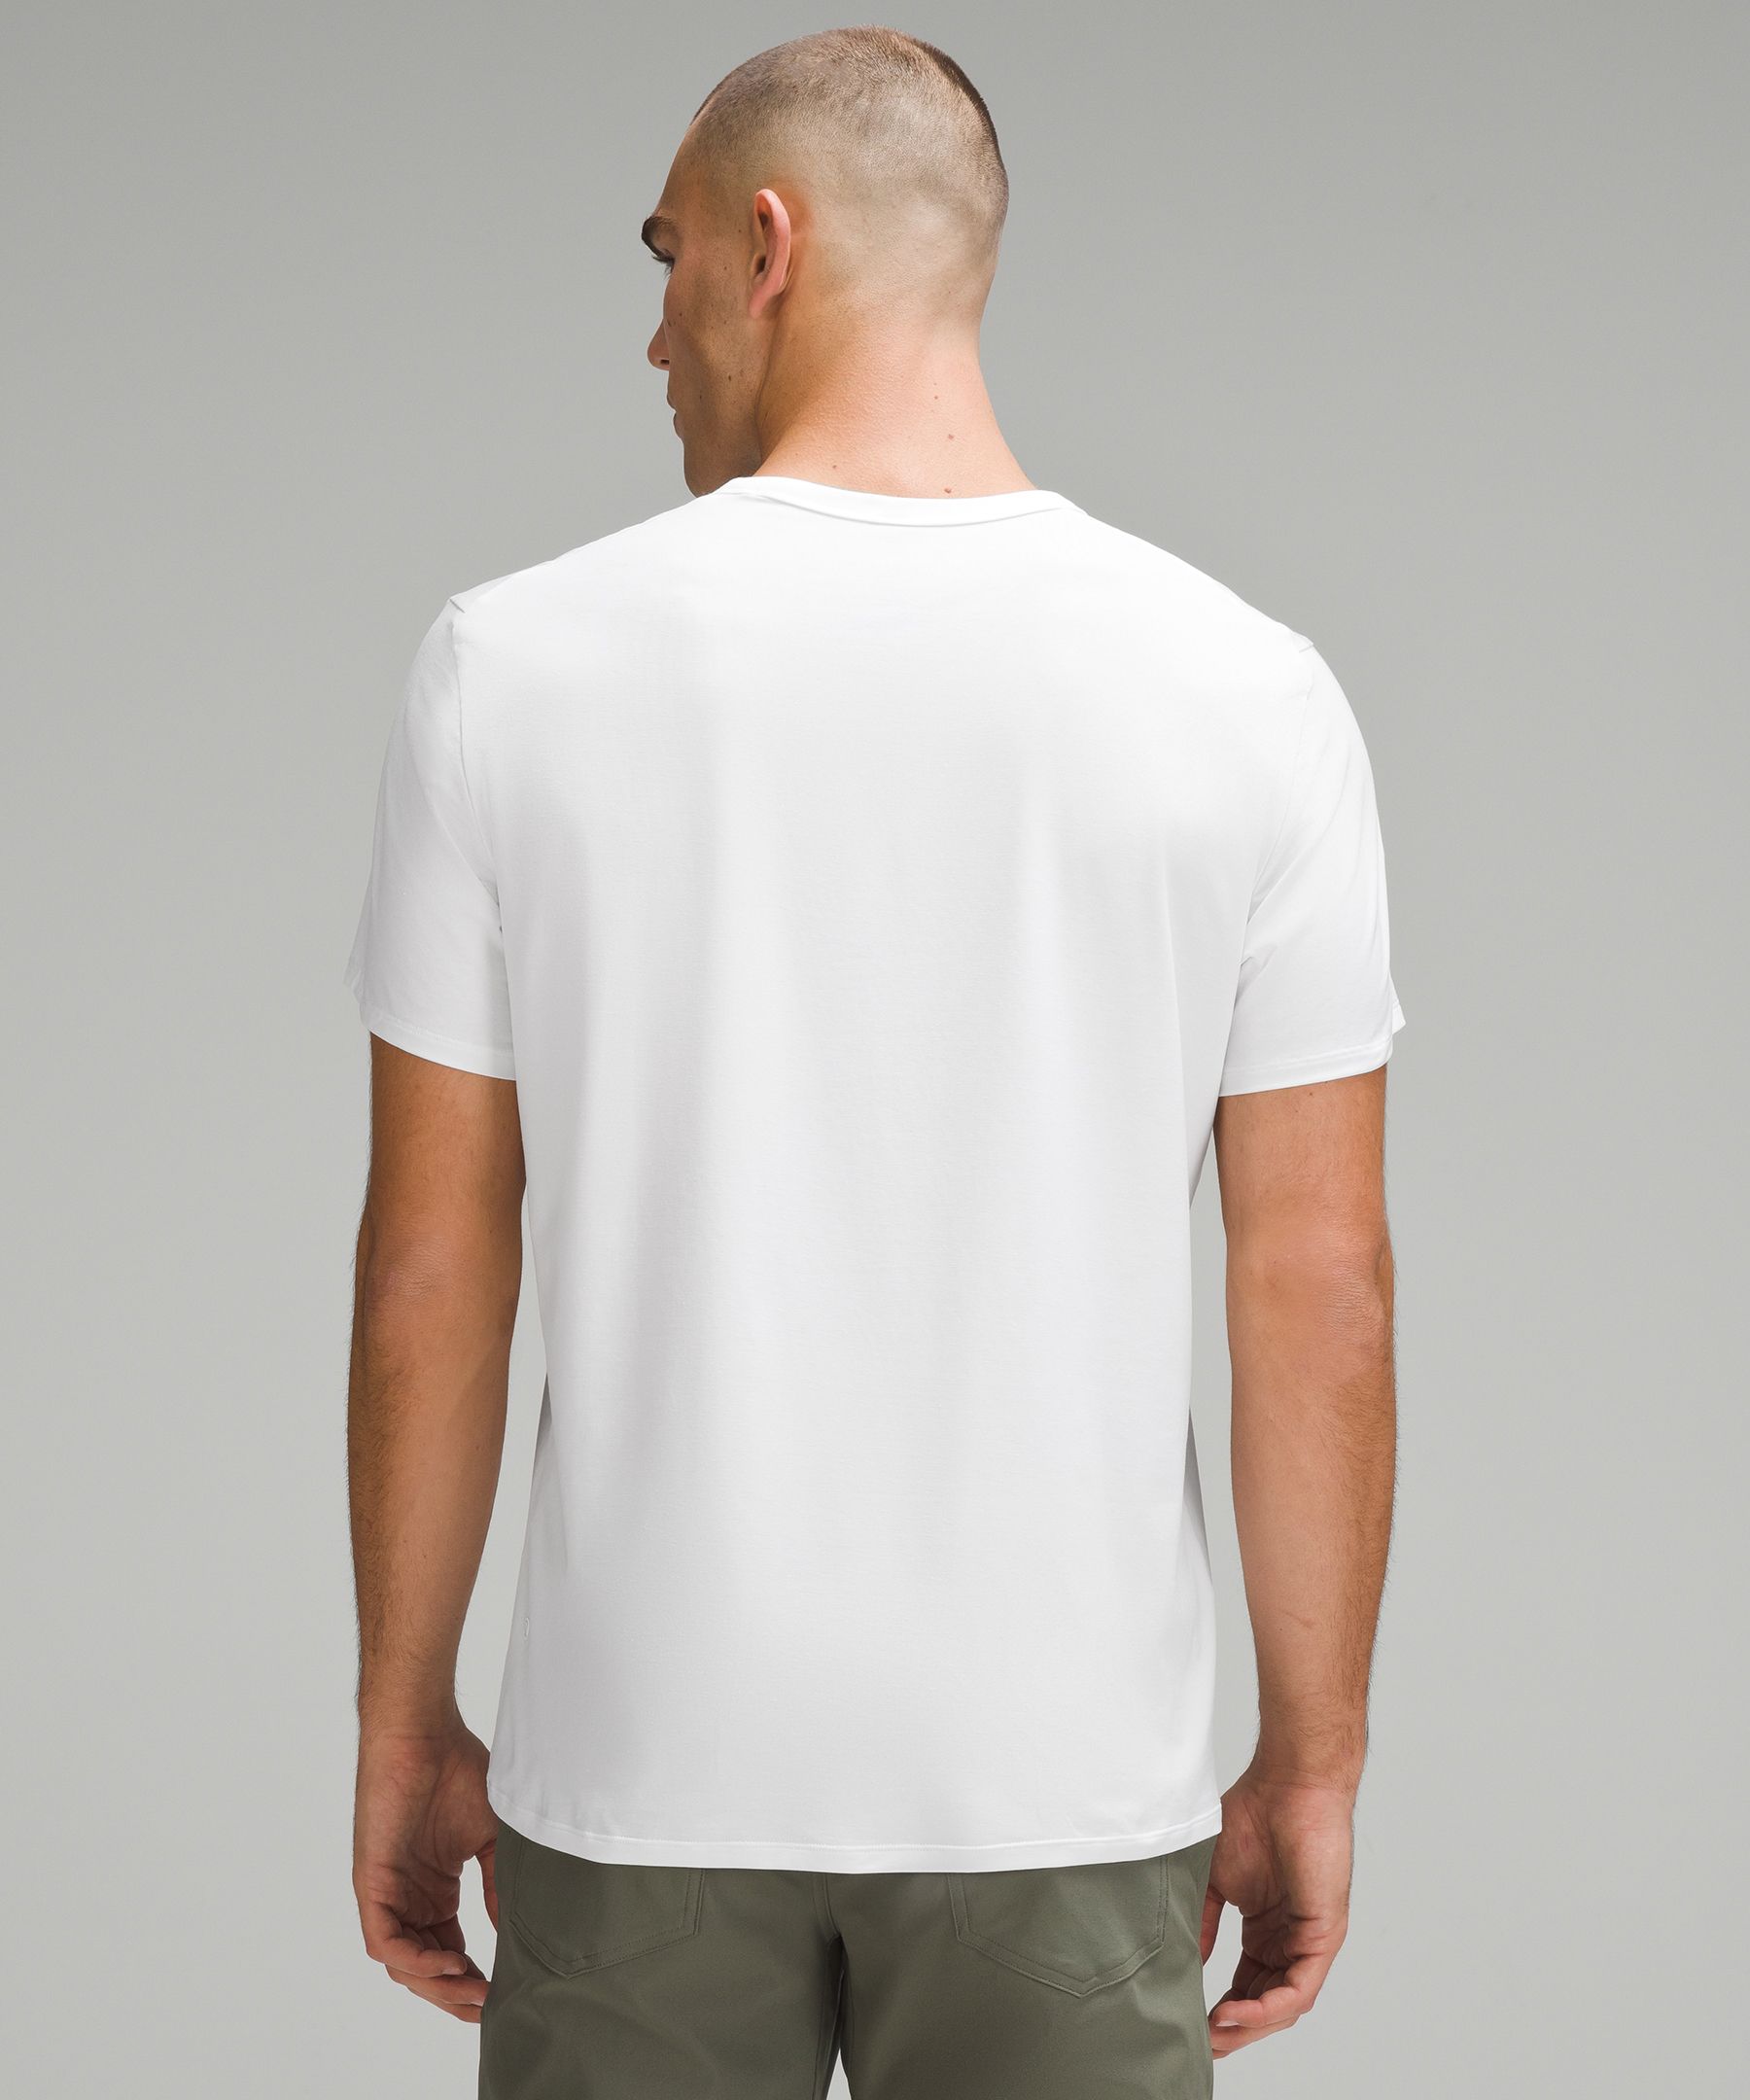 Lululemon Fundamental T-Shirt - White/Neutral - Size L